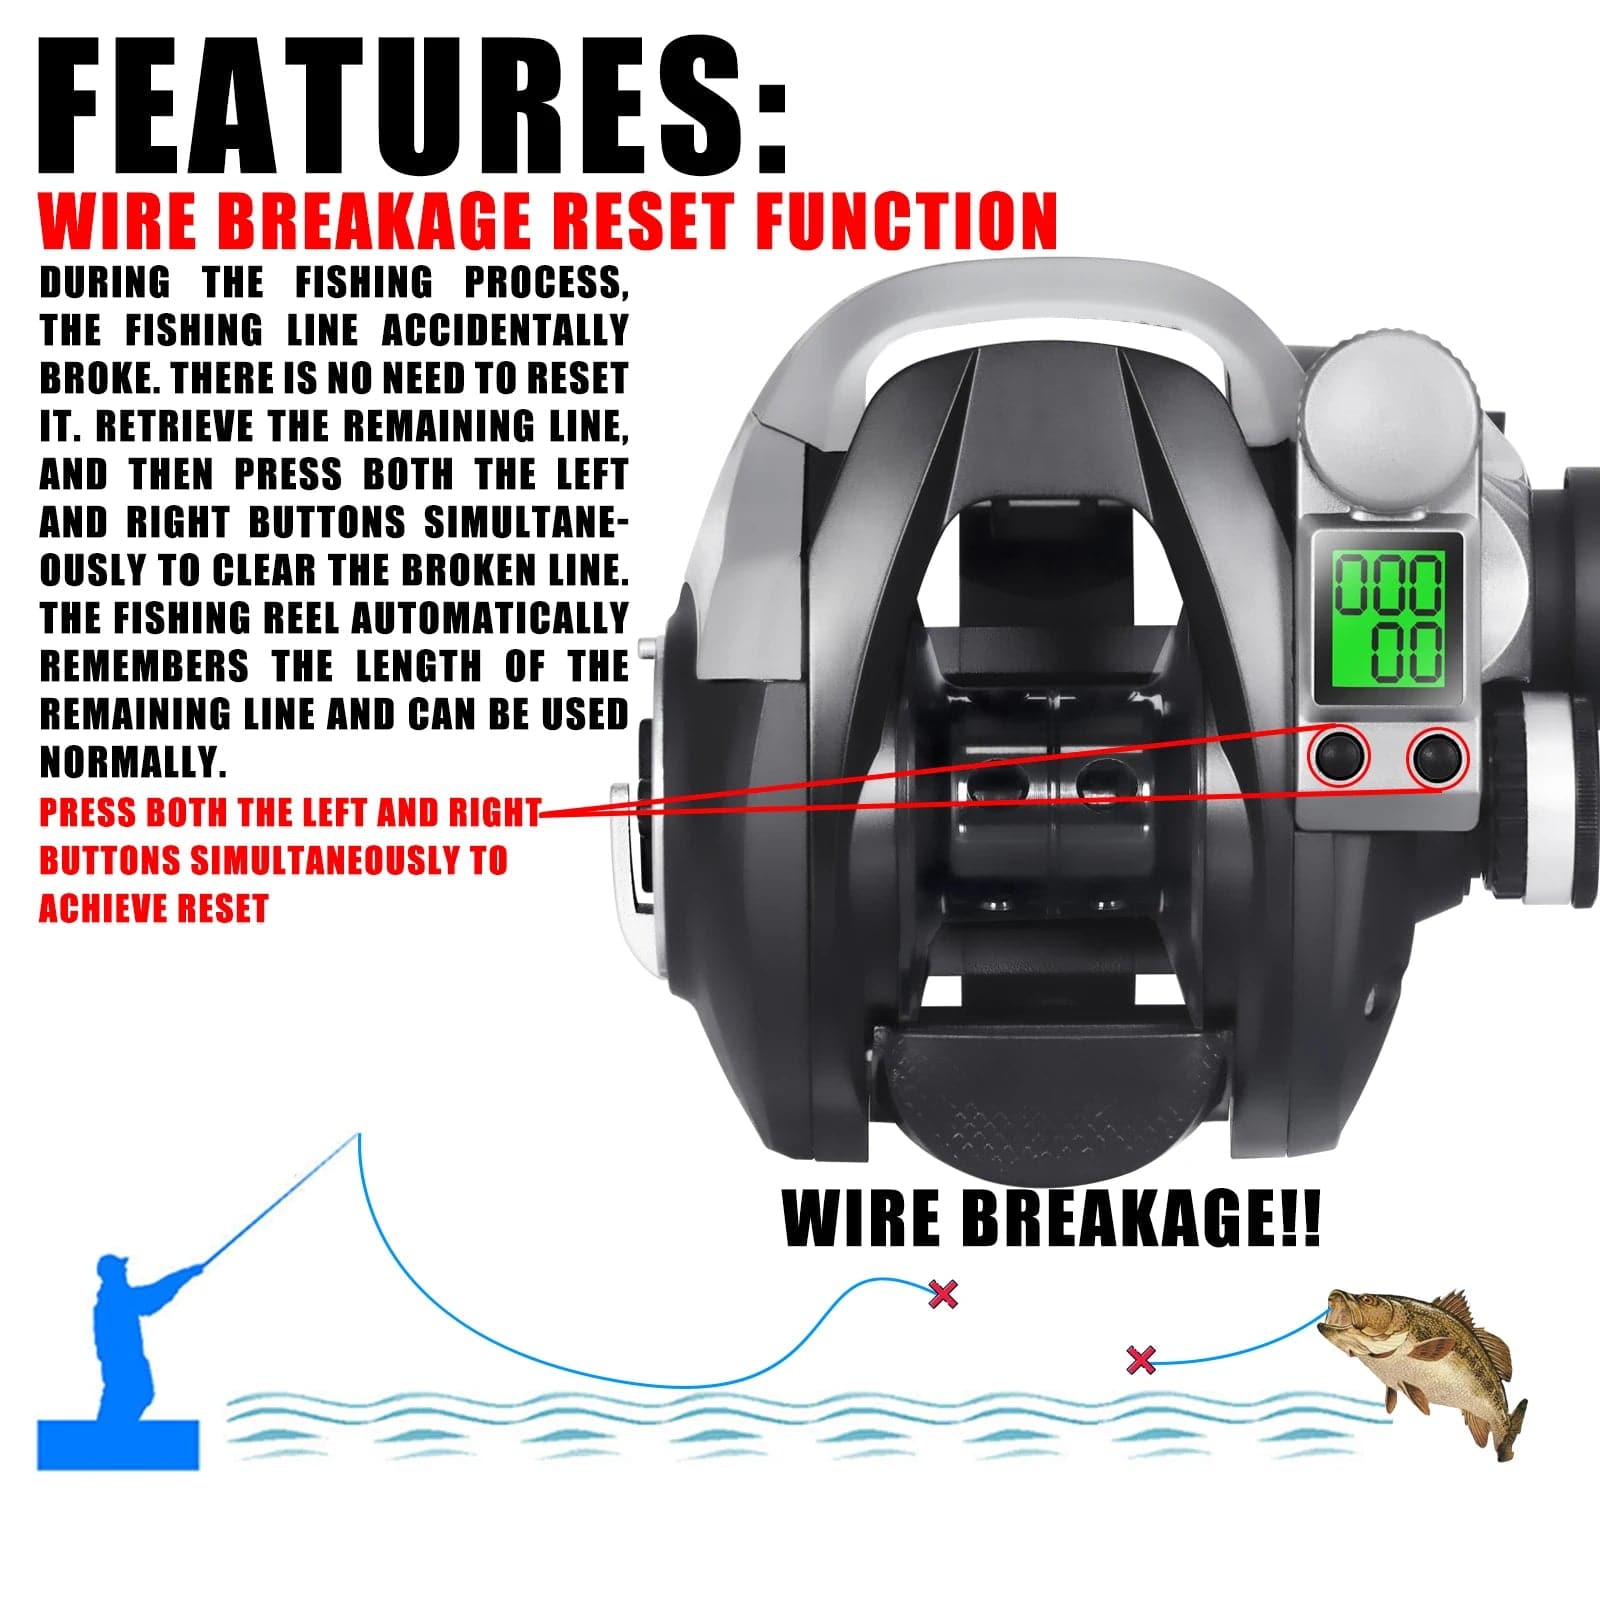 Led Screen Electronic Fishing Reel Baitcasting High Speed 7.2:1 10kg Waterproof Sea Saltwater Ice Fishing Wheel Moulinet Casting - Betatton - 